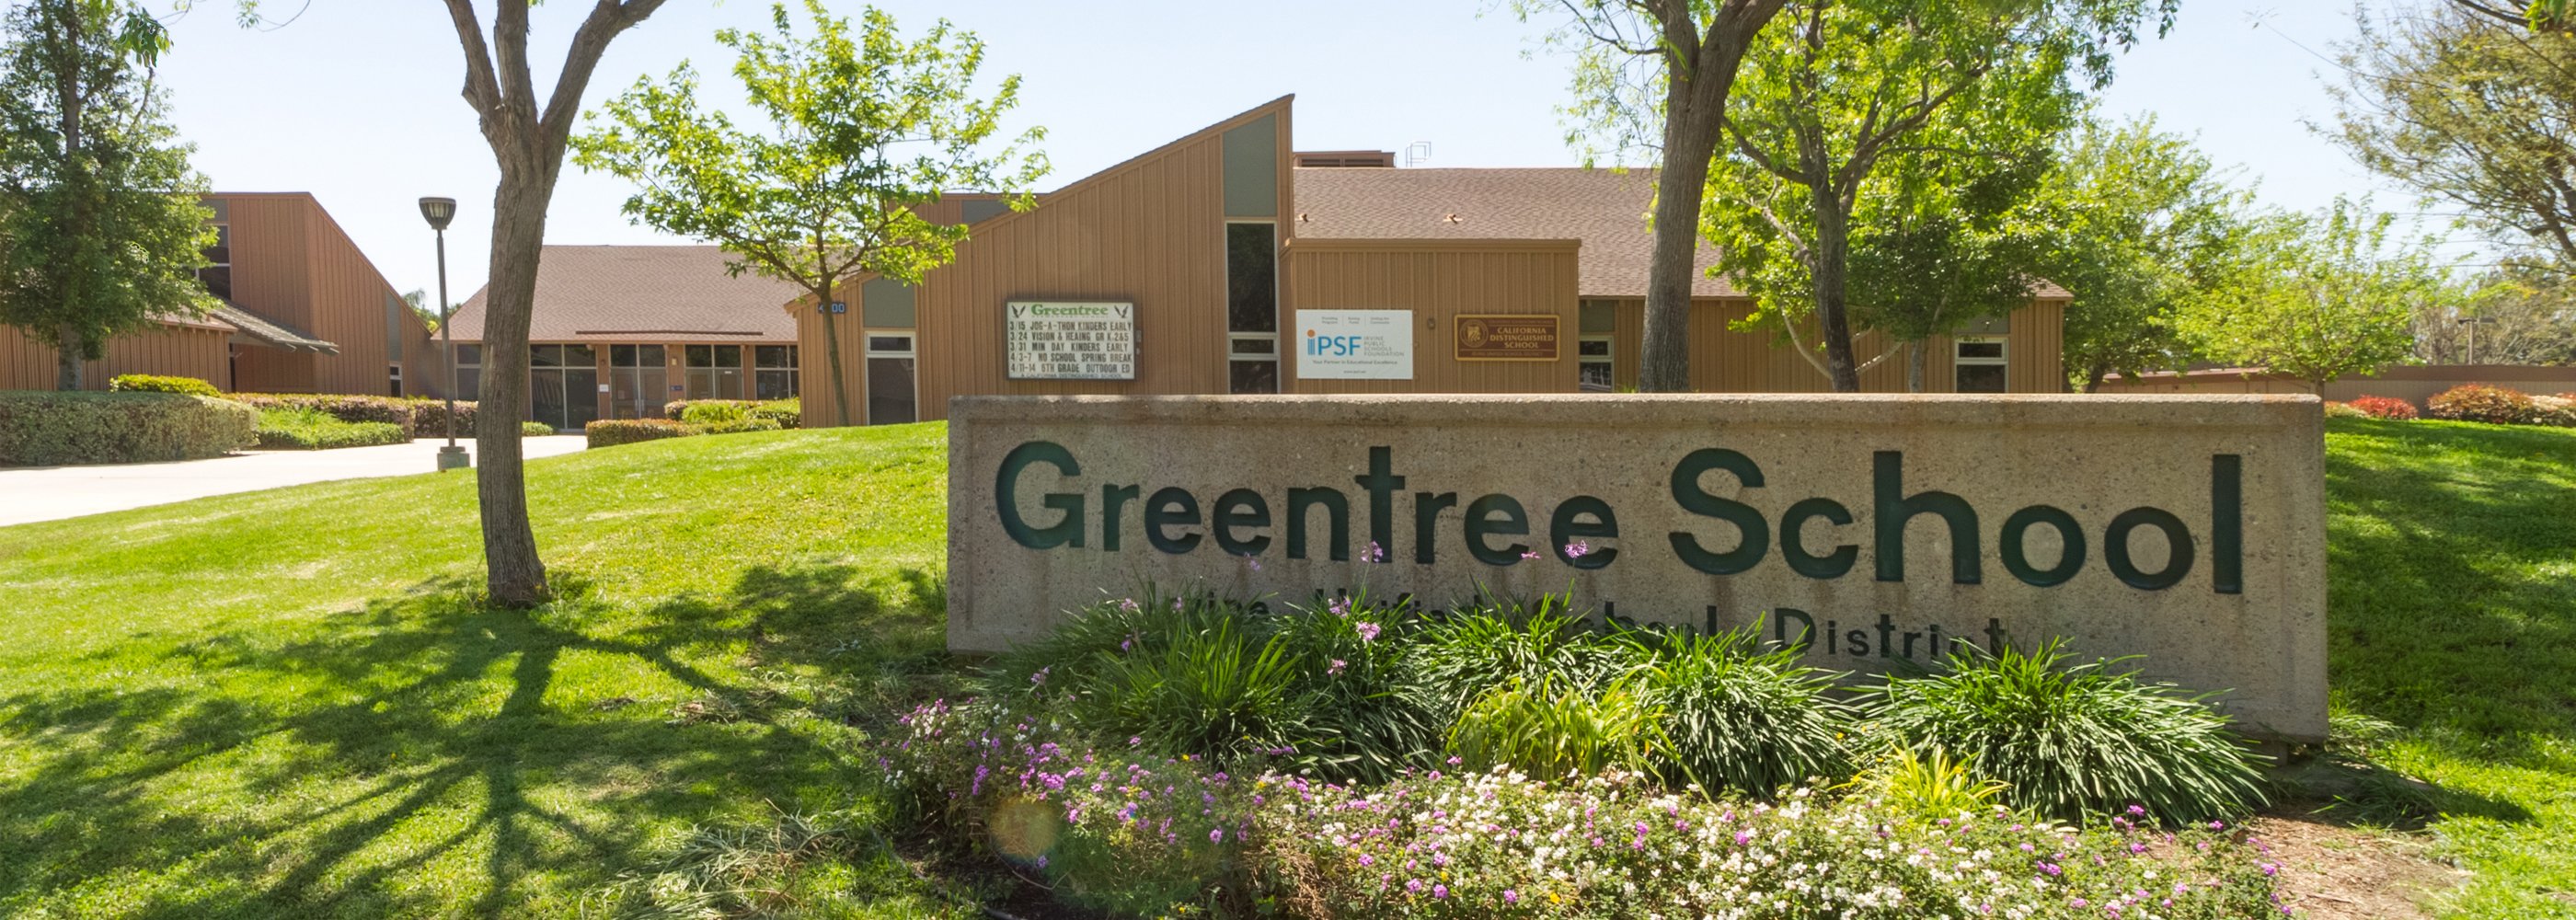 Greentree Elementary